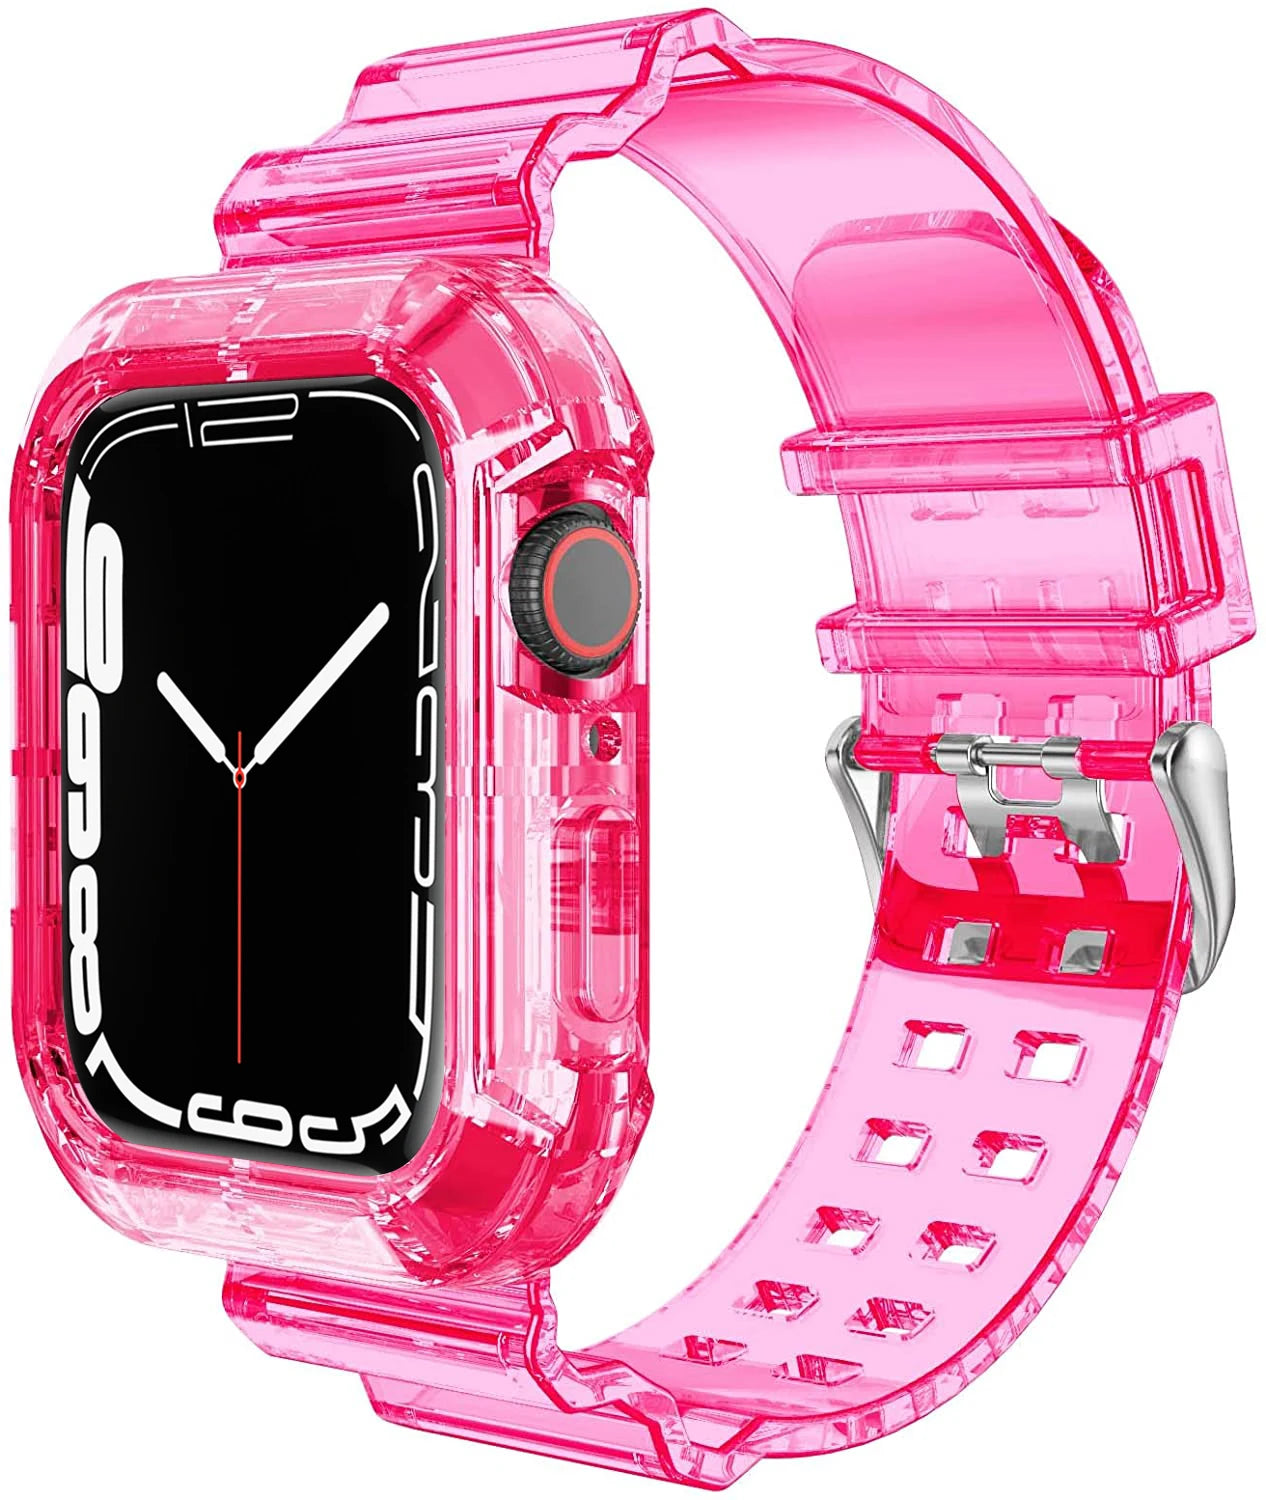 Apple Watch Case,Strap